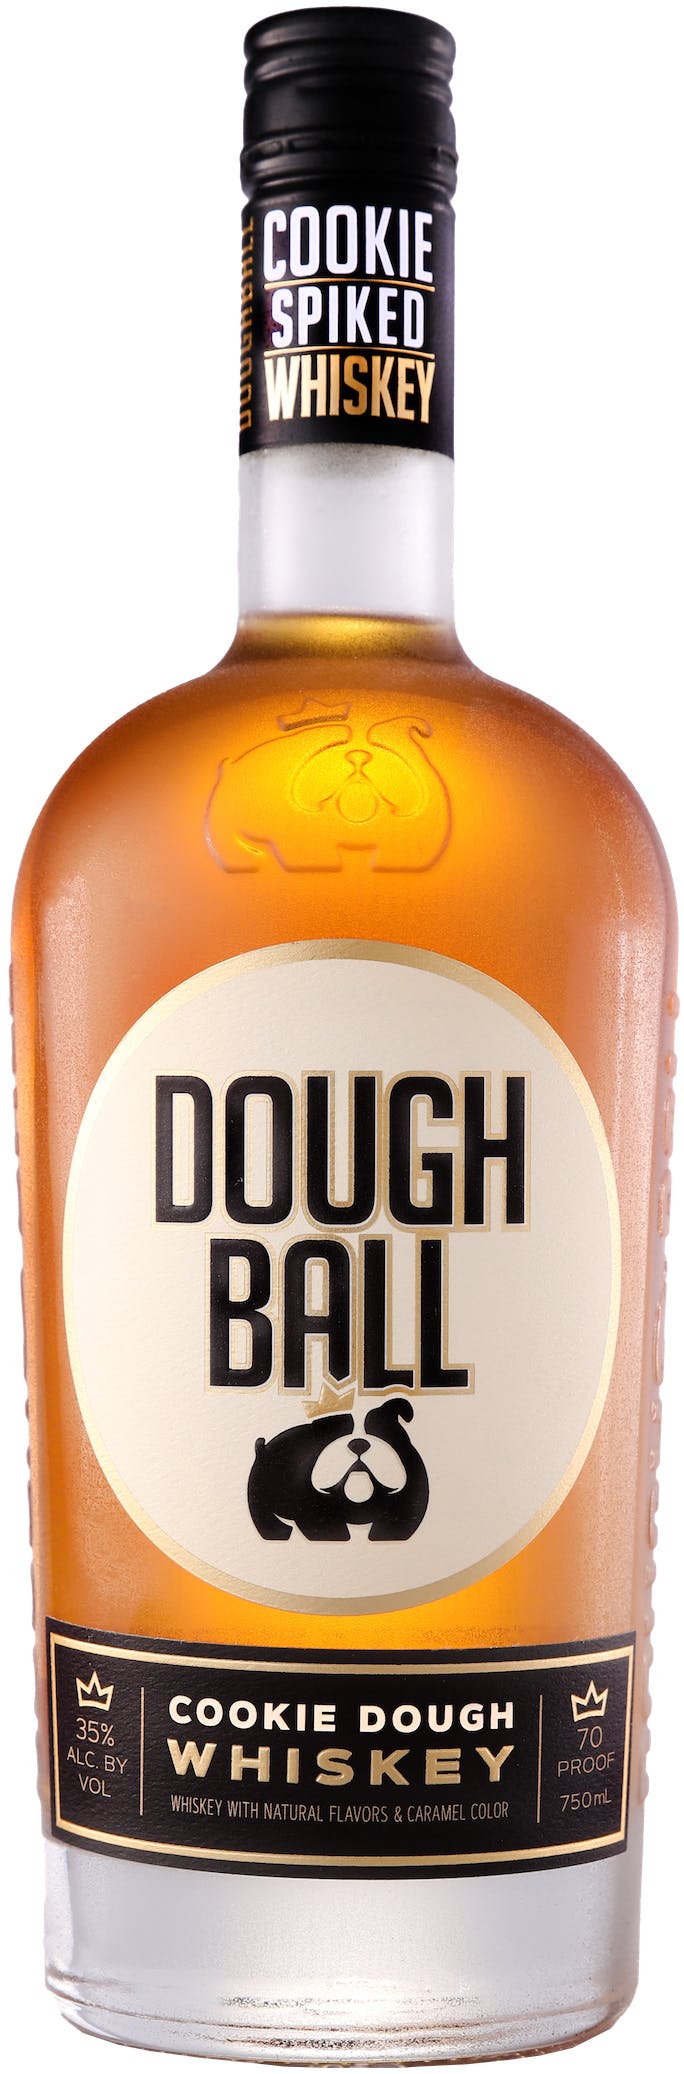 Dough Ball Cookie Dough Whiskey 750ml - Argonaut Wine & Liquor